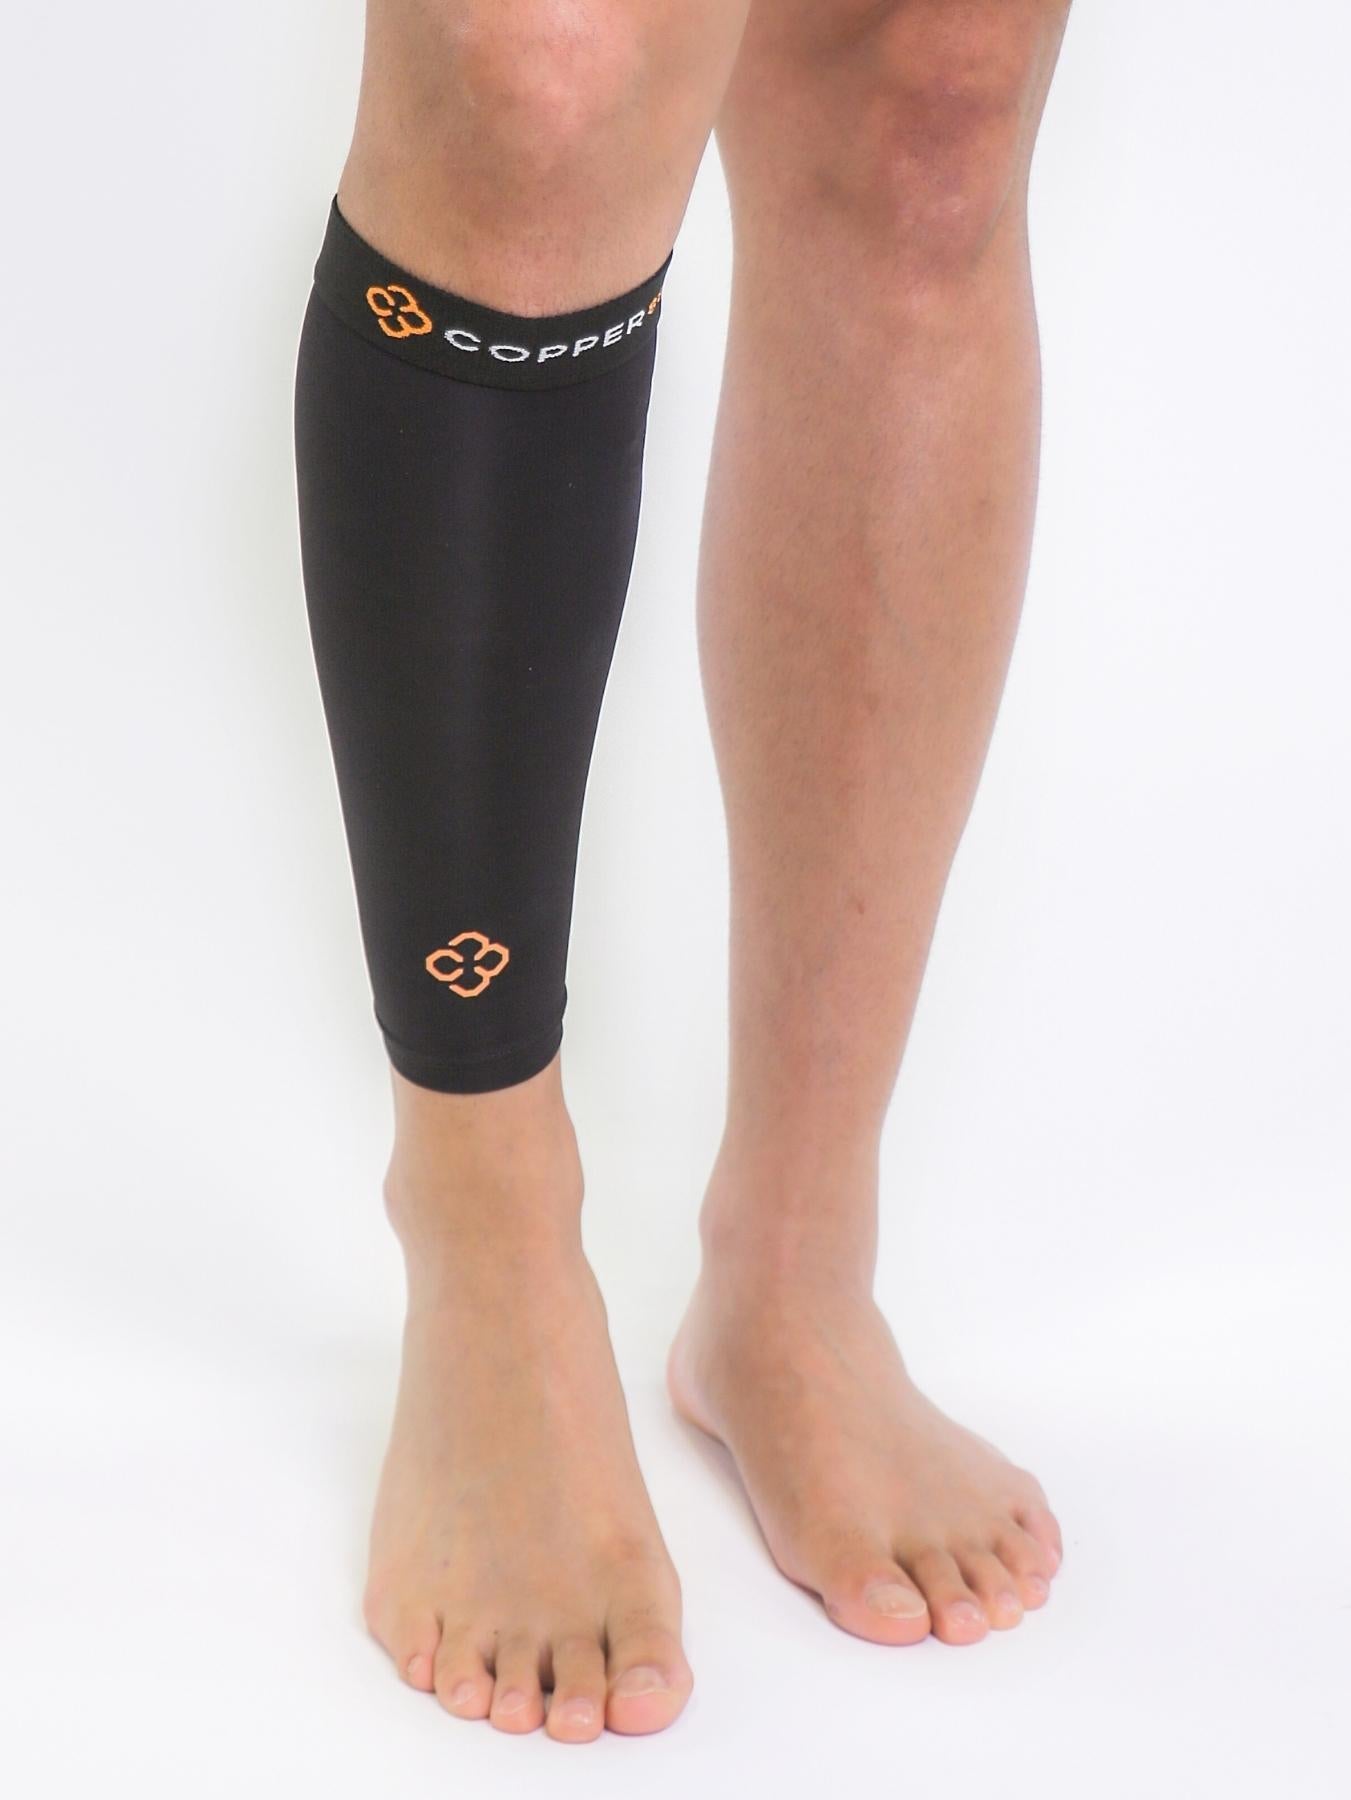 closal Copper fit calf sleeve Knee, Calf & Thigh Support Knee